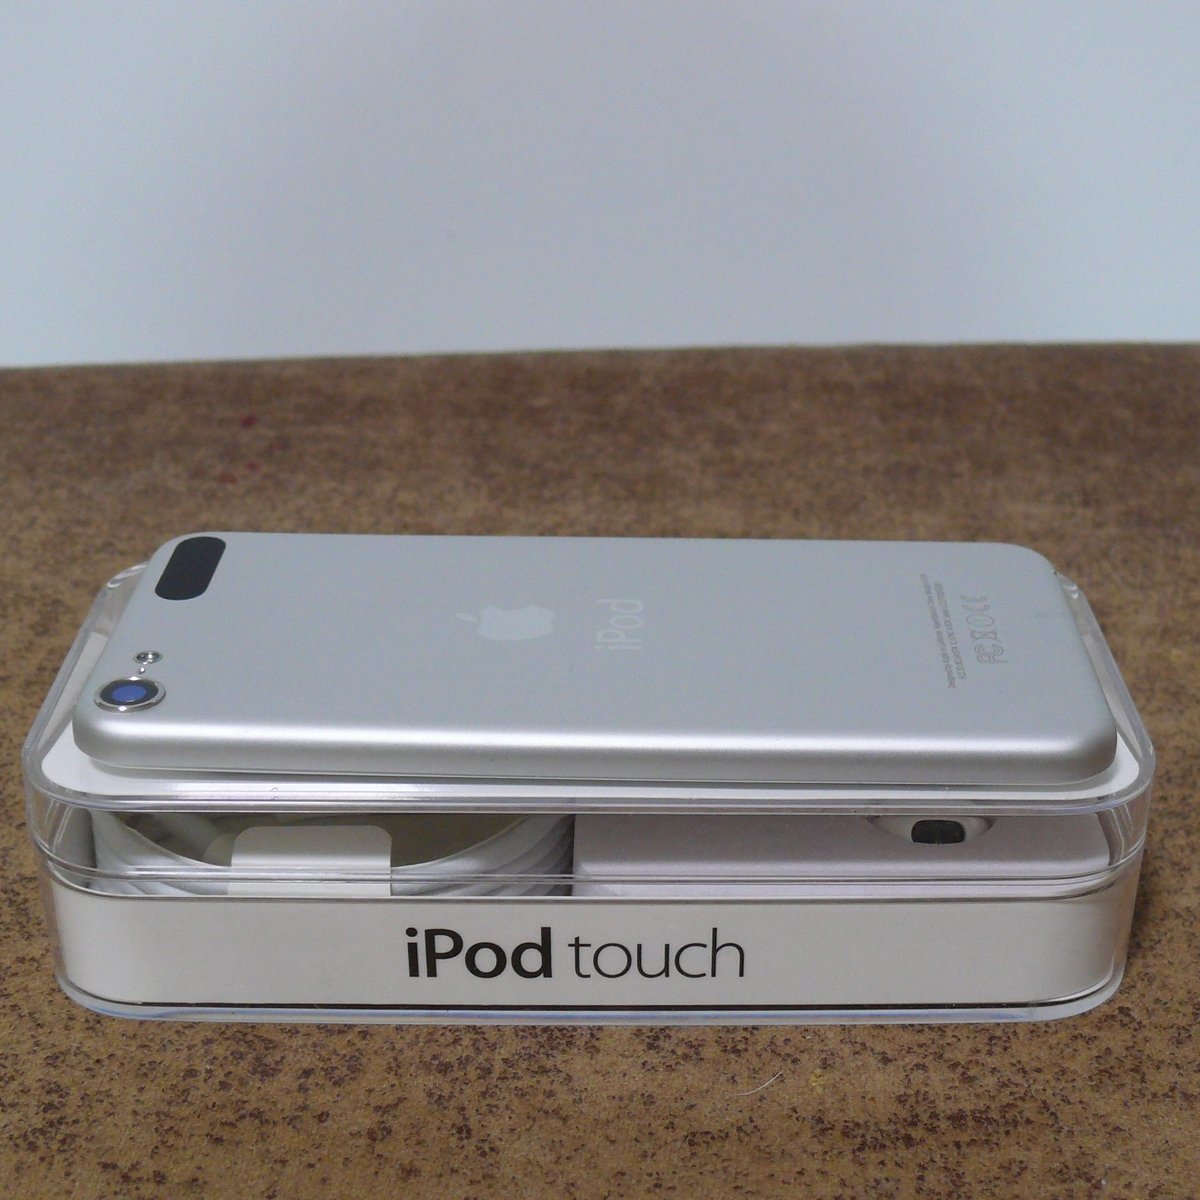 a256k☆Apple iPod touch 16GB シルバー☆wi-fi A1574 MKH42J/A☆初期化済☆付属品付き_画像7